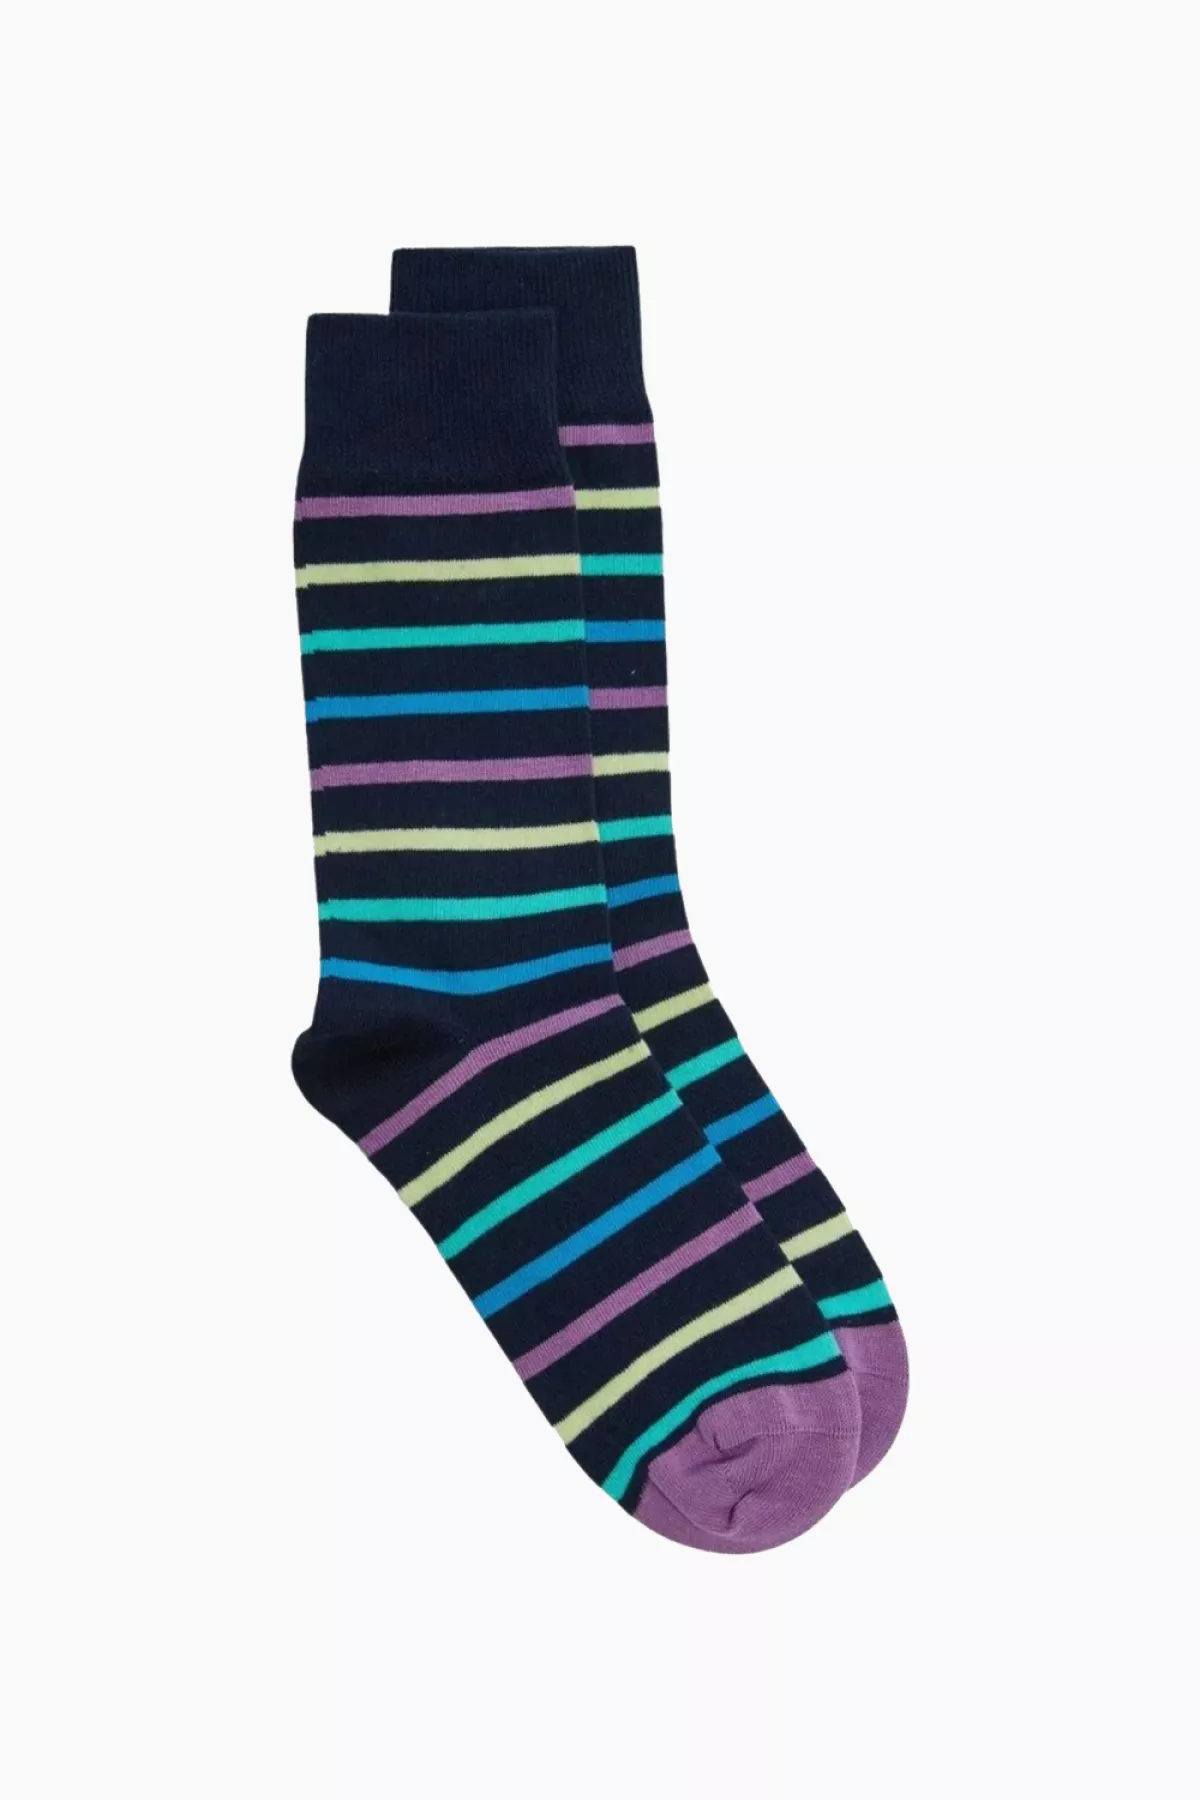 #2 - Finley Stripe Socks - Navy Stripes - Wood Wood - Navy 40-42